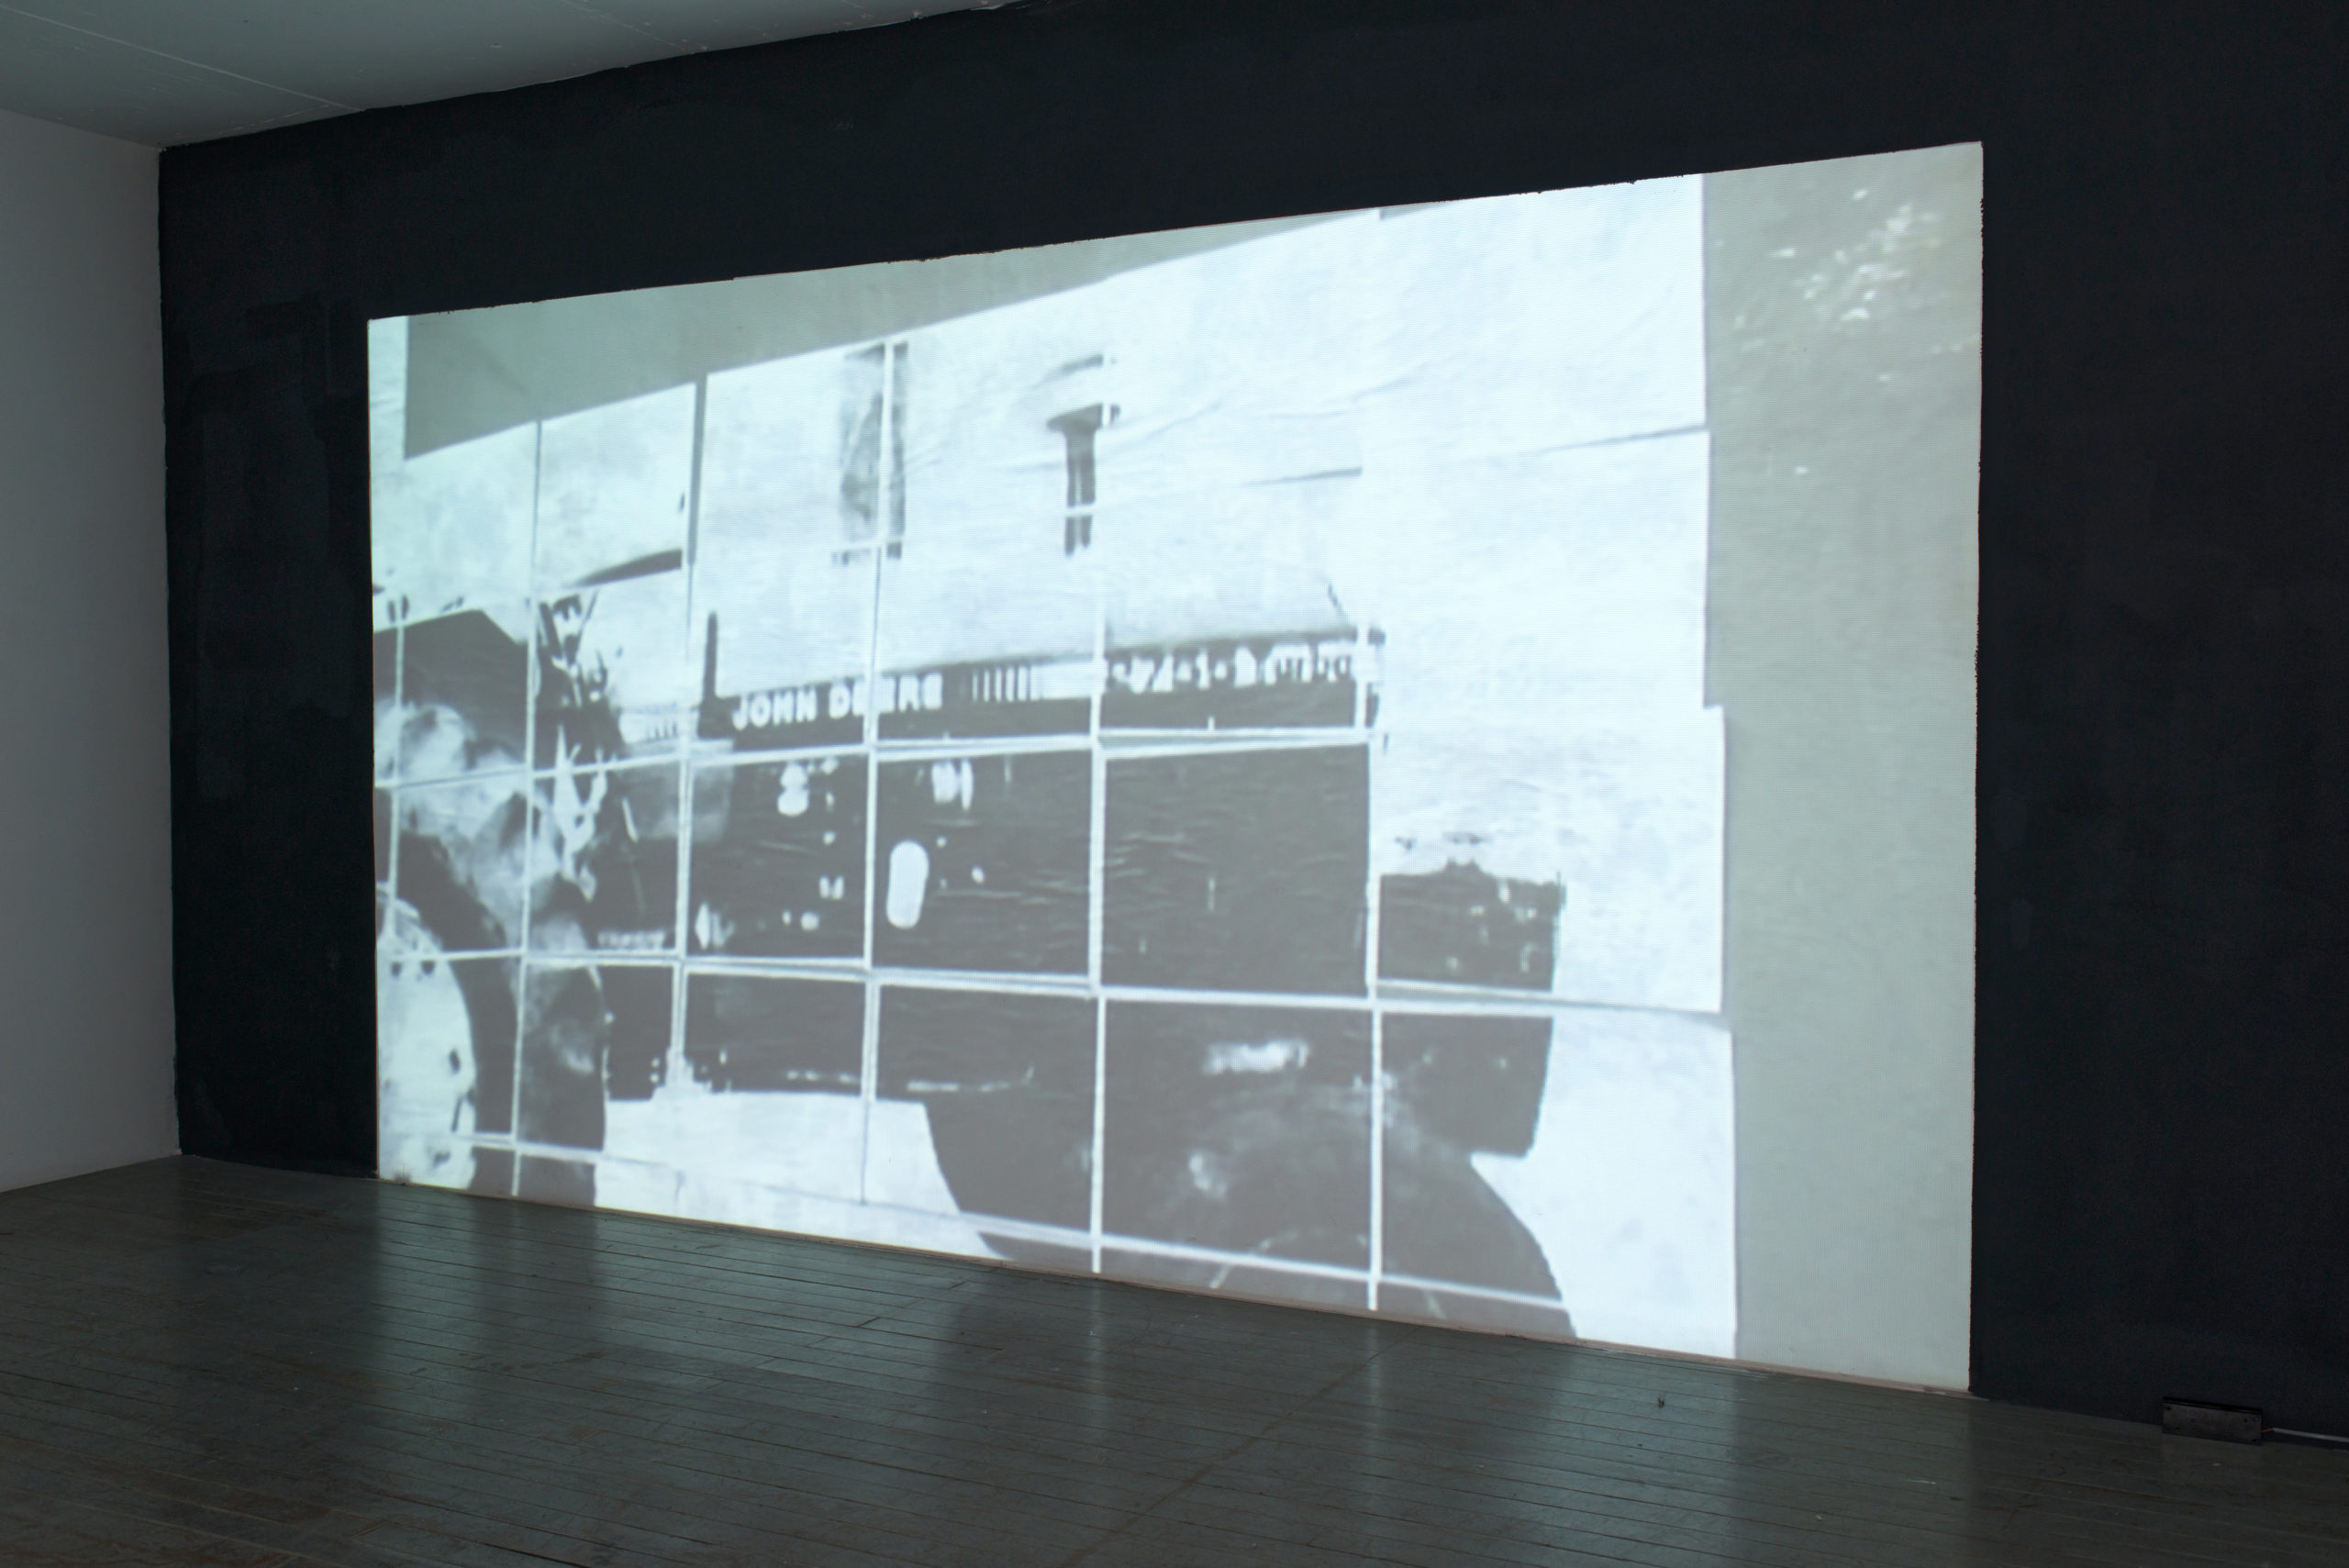 Minerva Cuevas – Disidencia v. 2.0, 2008-2010, installation view, Total Museum of Contemporary Art, Seoul, South Korea, 2014